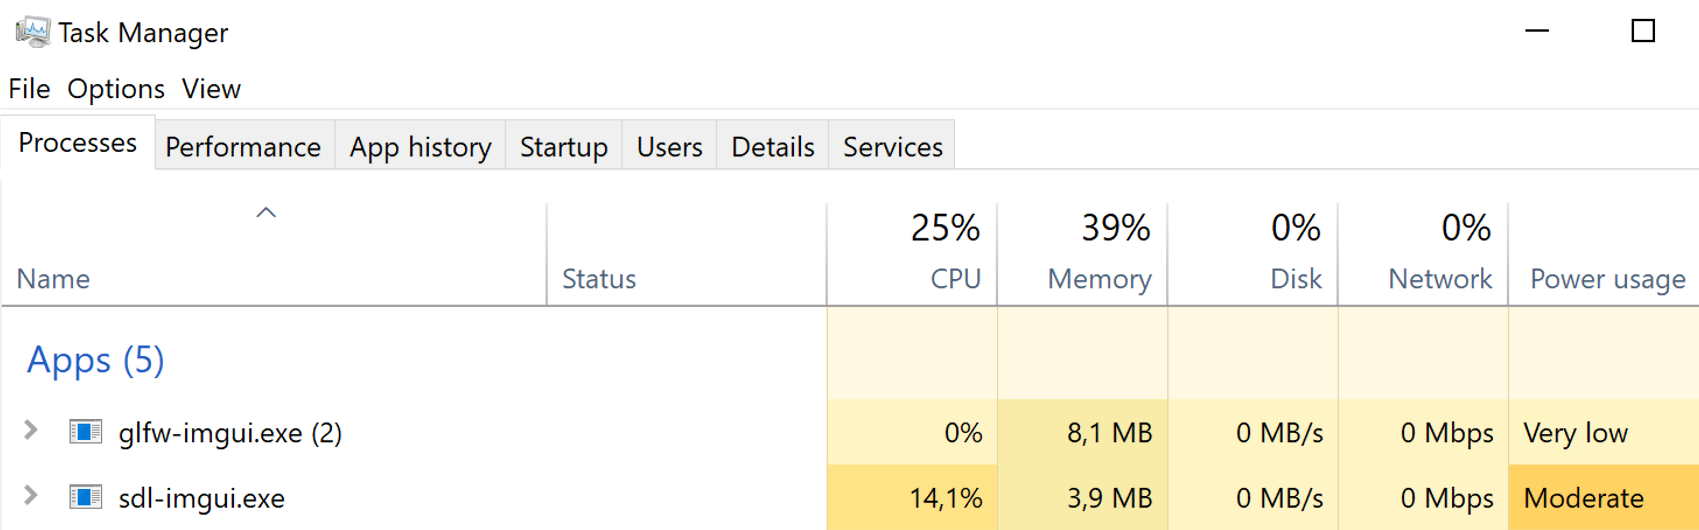 GLFW vs SDL, CPU and memory usage on Windows